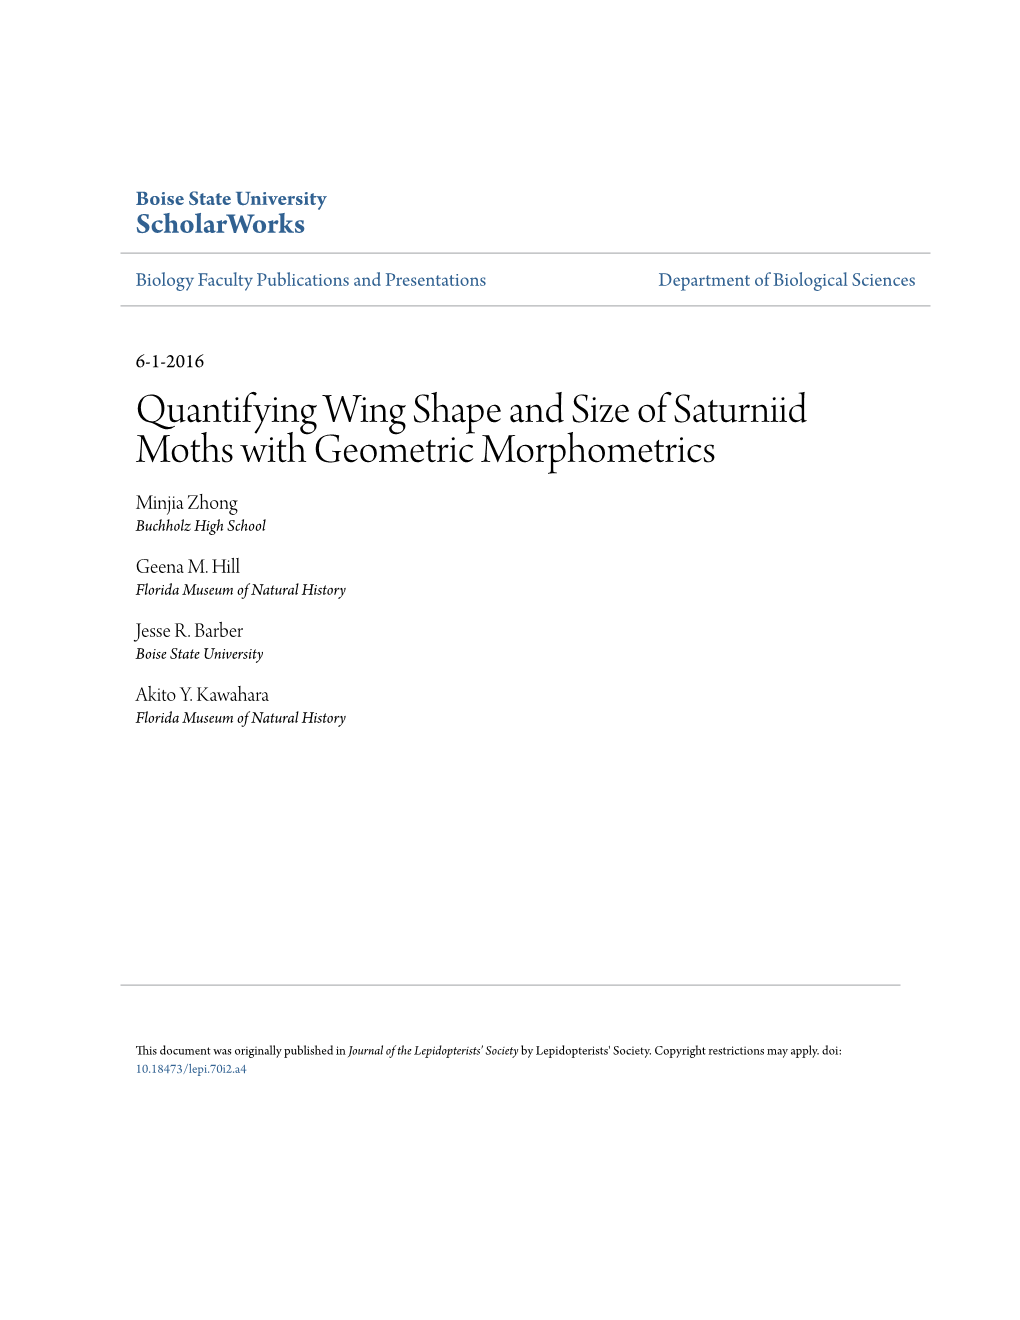 Quantifying Wing Shape and Size of Saturniid Moths with Geometric Morphometrics Minjia Zhong Buchholz High School